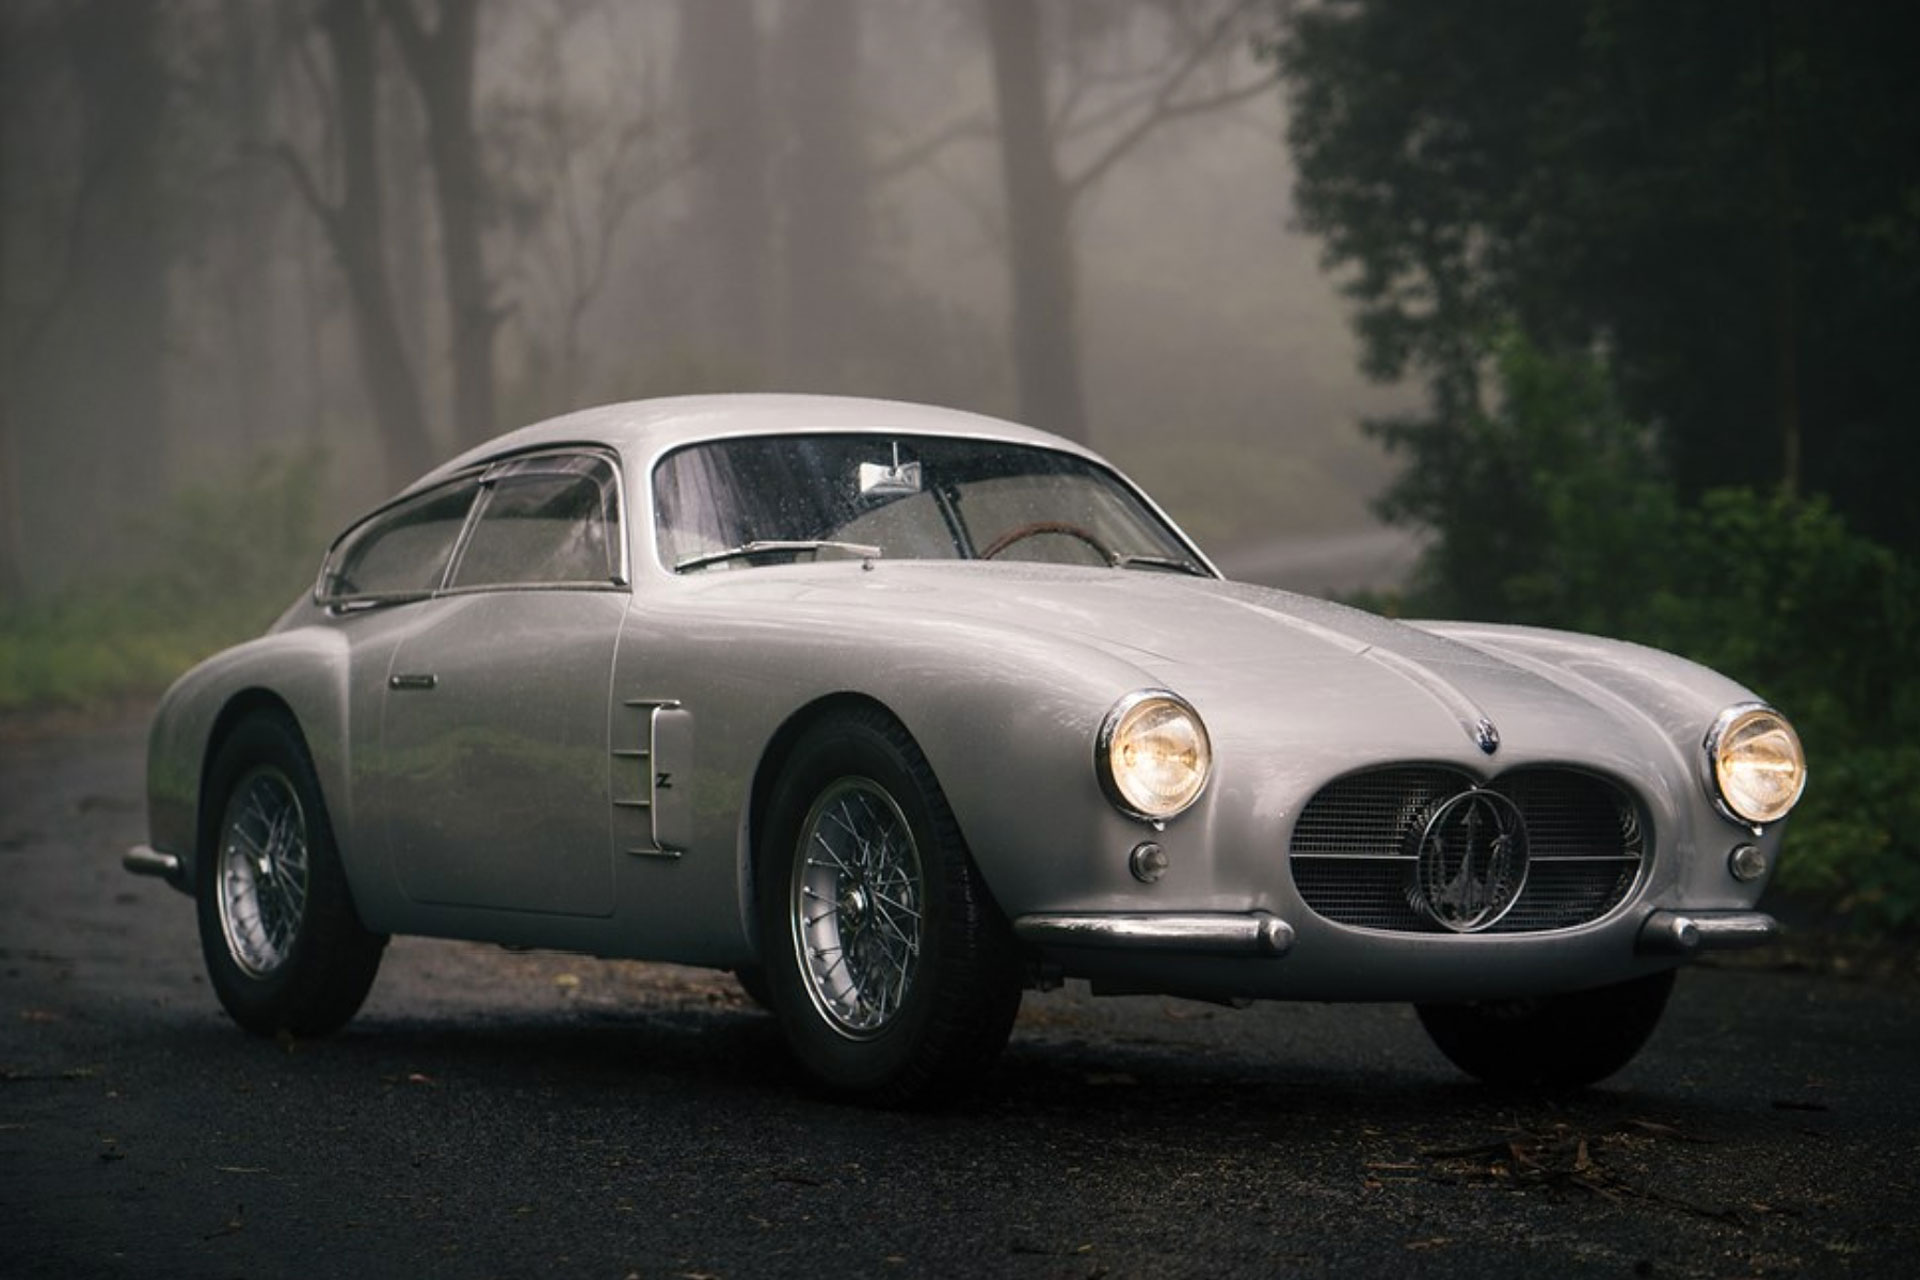 bao maserati ag berlinetta zagato a timeless automotive masterpiece 6552554993a26 1956 Maserati A6g/2000 Berlinetta Zagato: A Timeless Automotive Masterpiece